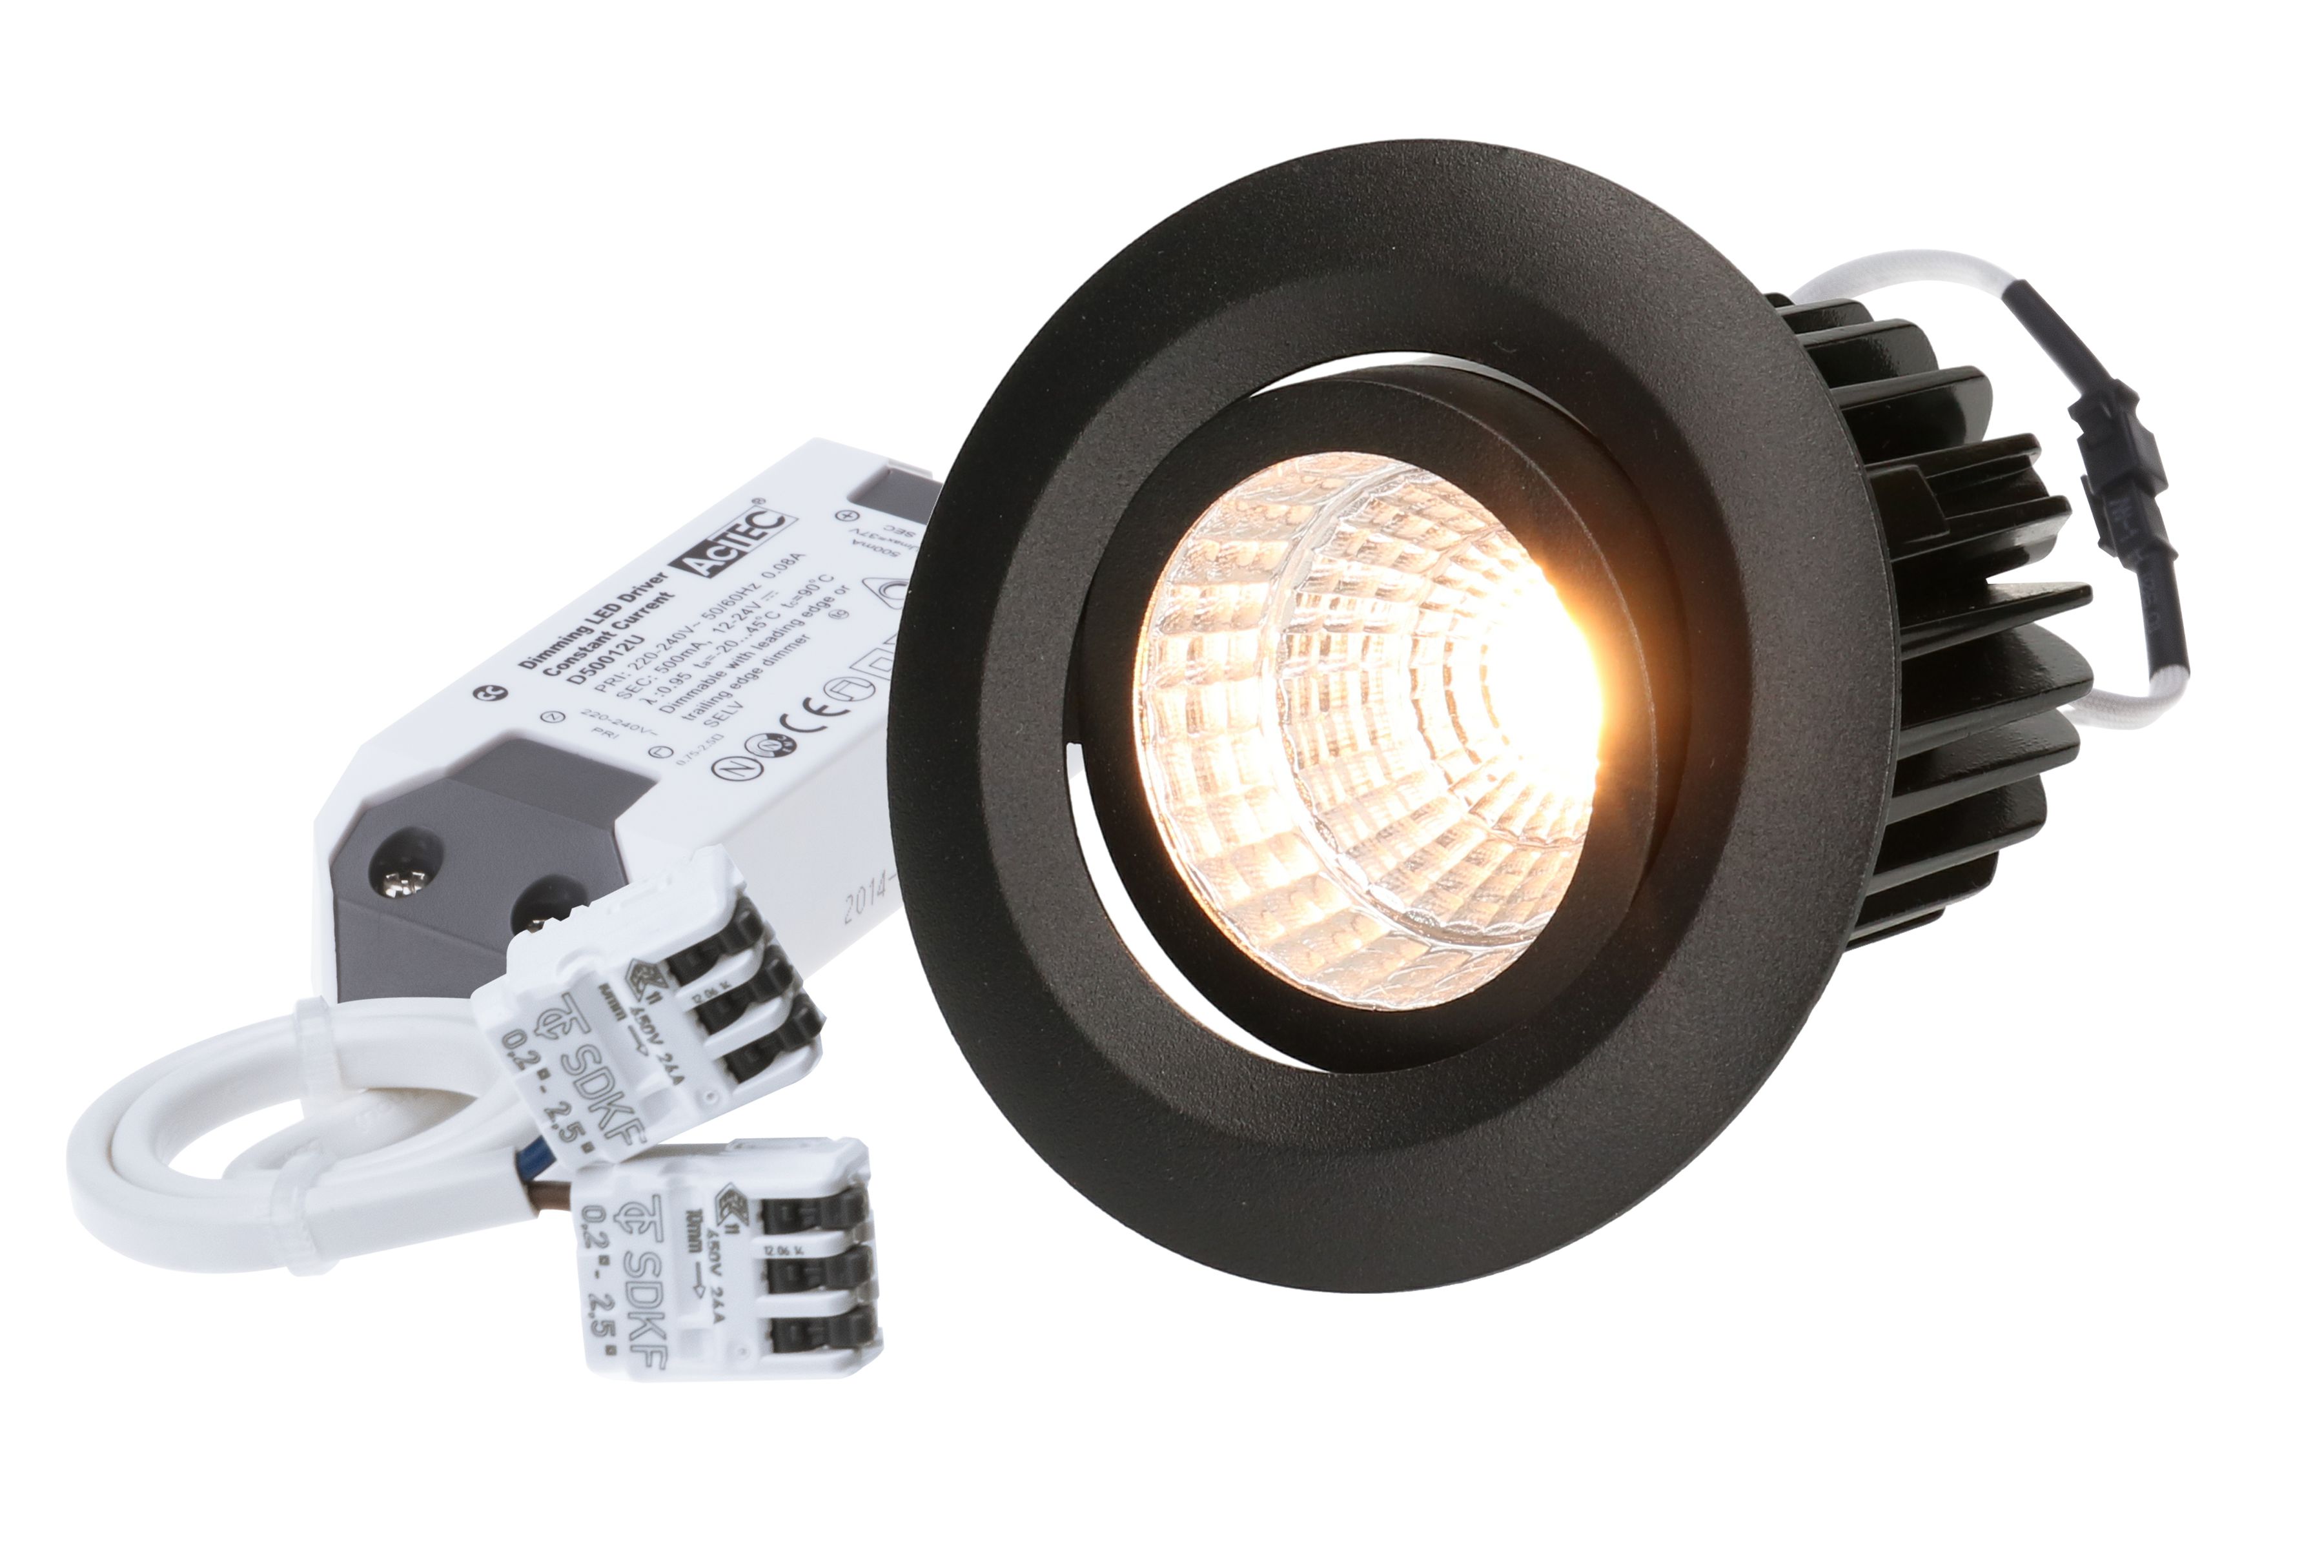 LED-Einbauspot MOVE schwarz matt 3000K 960lm 38°